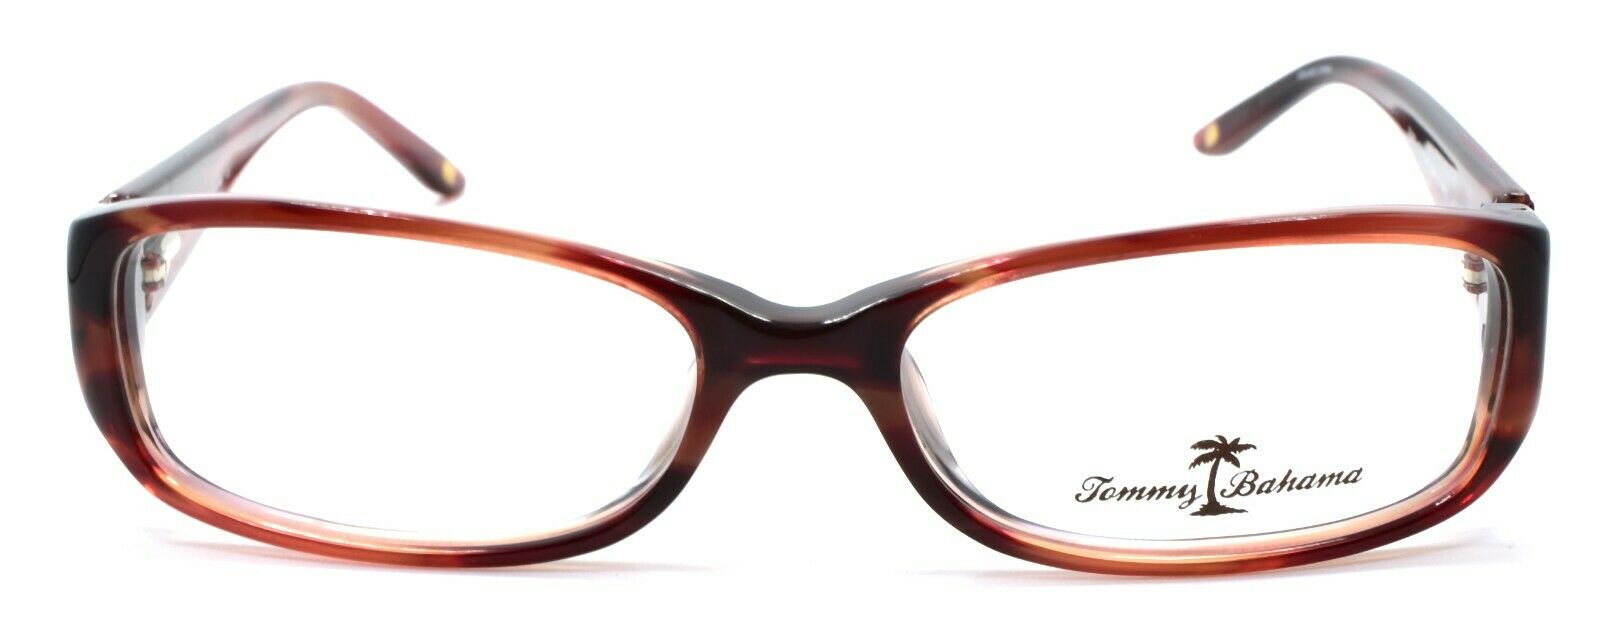 2-Tommy Bahama TB5002 002 Women's Eyeglasses Frames 52-16-135 Ruby-788678059918-IKSpecs